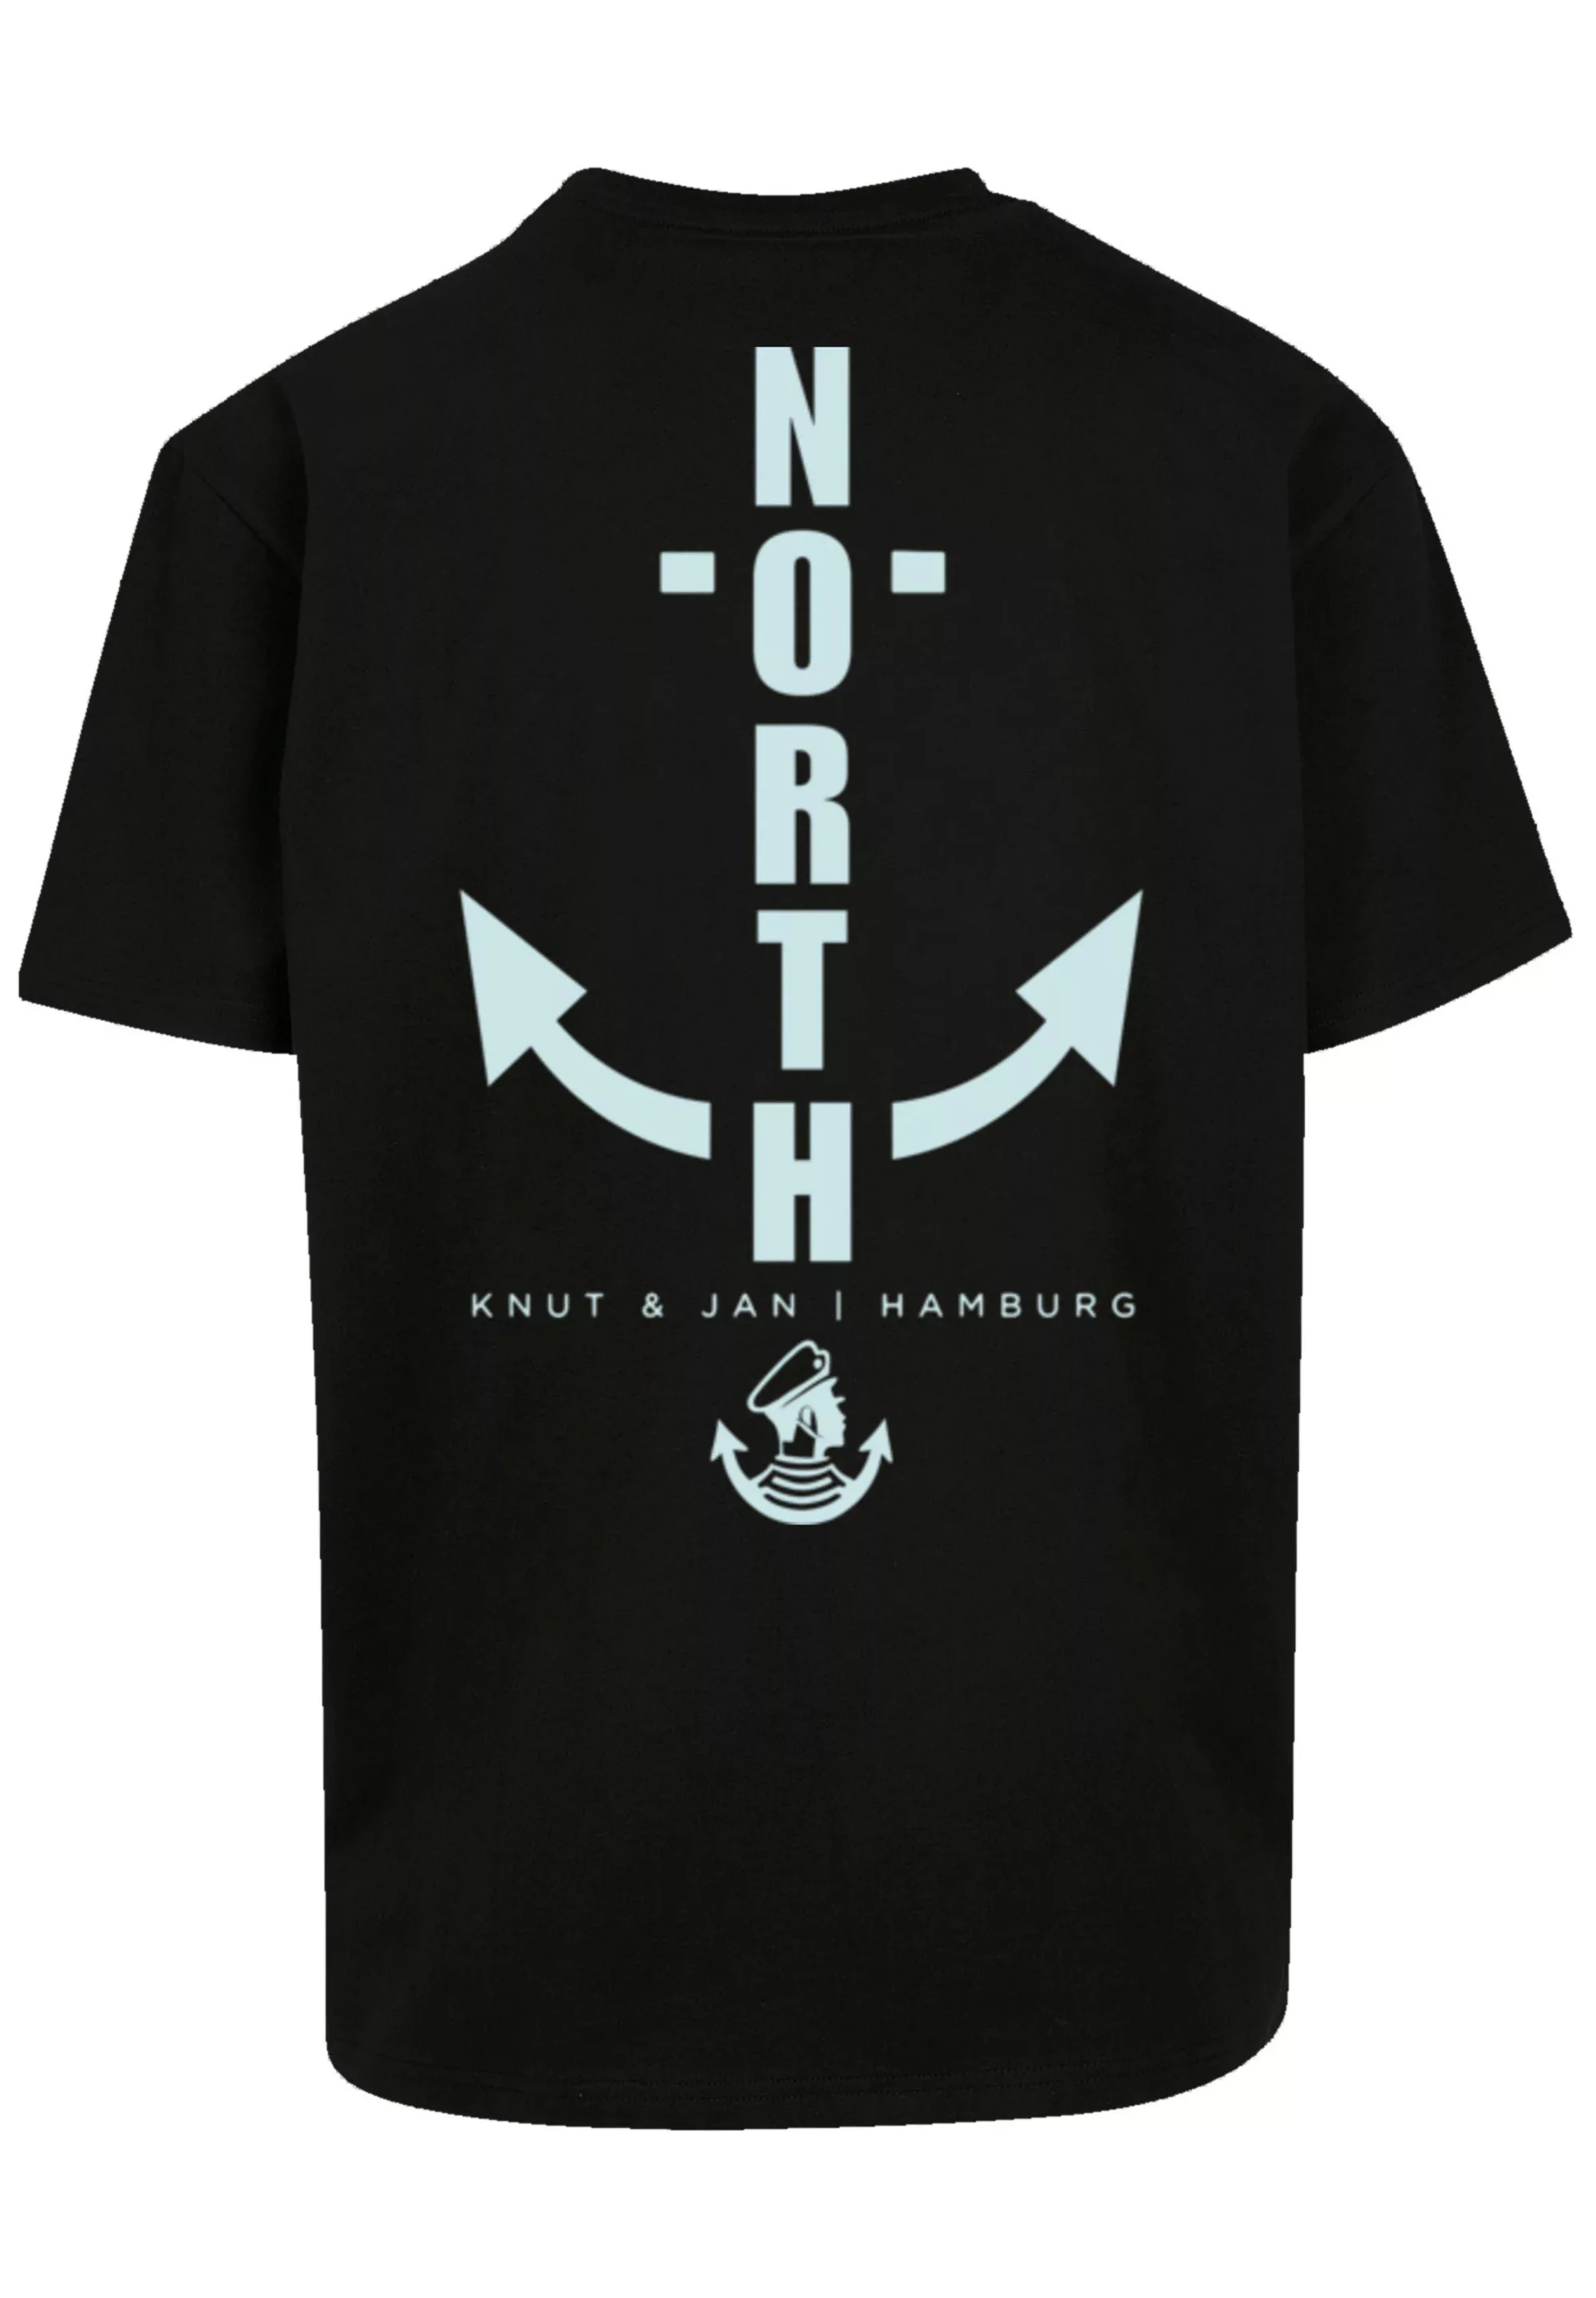 F4NT4STIC T-Shirt "North Anker Knut & Jan Hamburg" günstig online kaufen